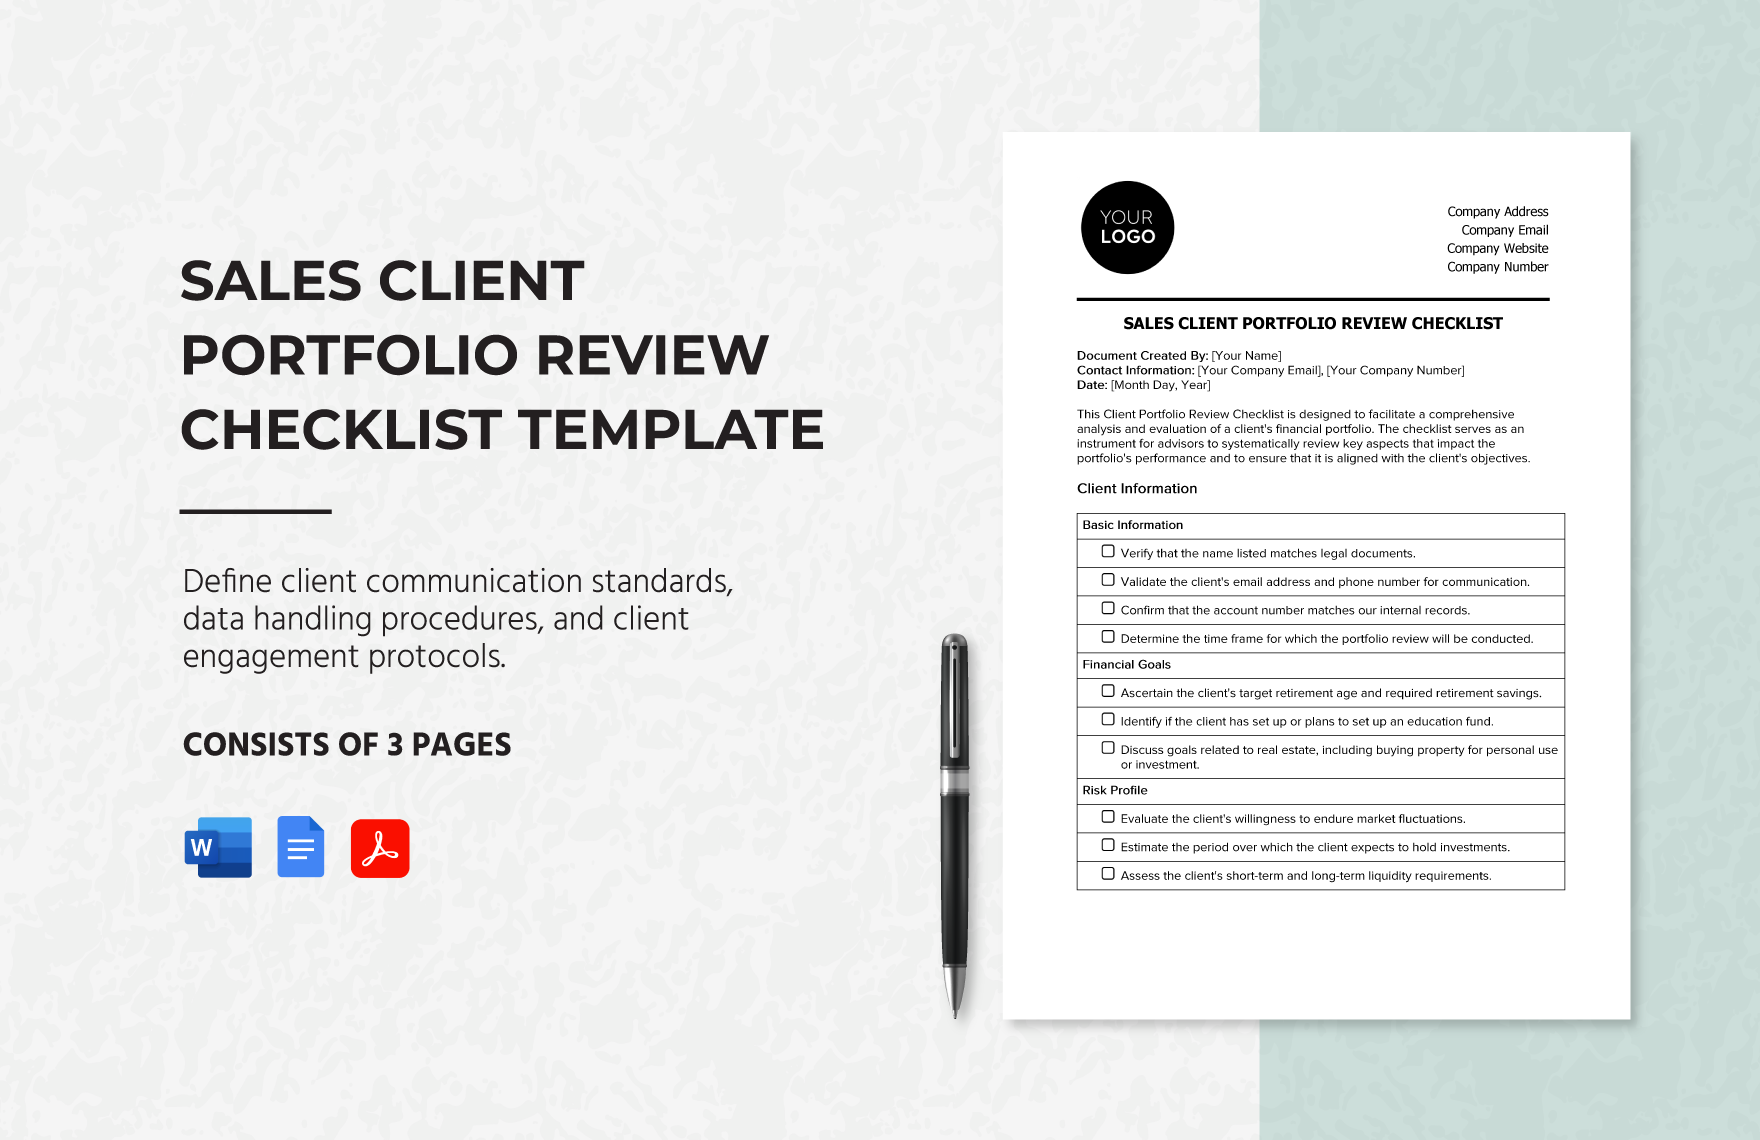 Sales Client Portfolio Review Checklist Template in Word, Google Docs, PDF